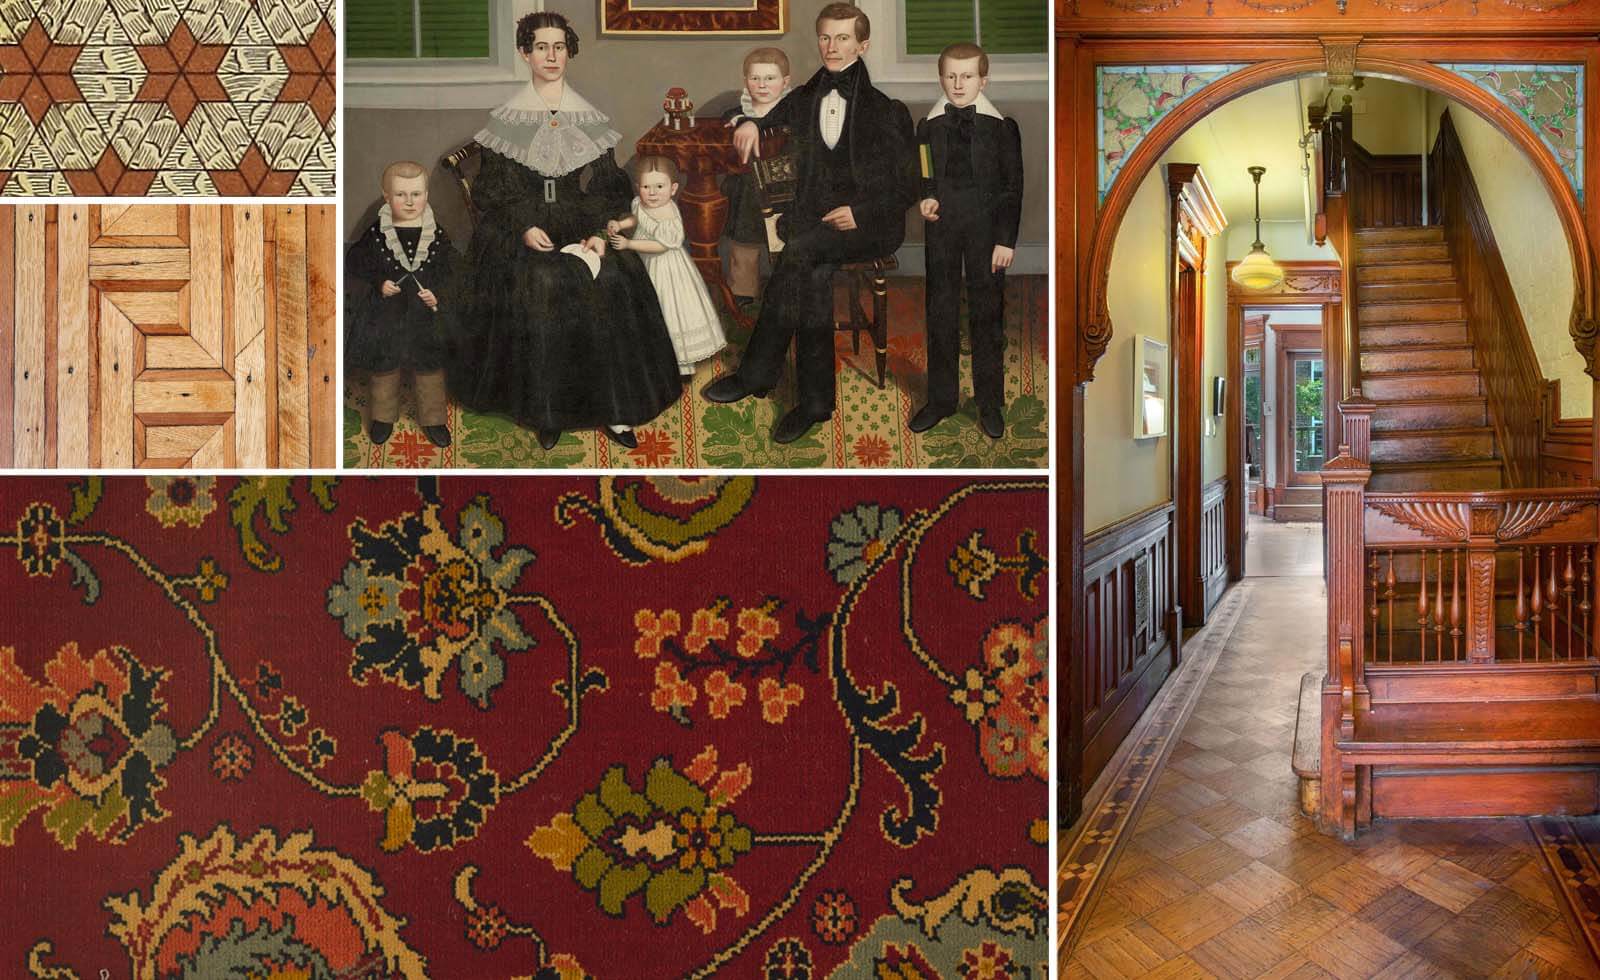 https://www.brownstoner.com/wp-content/uploads/2019/03/interior-design-history-brooklyn-carpeting-parquet-flooring-carpet-rug.jpg